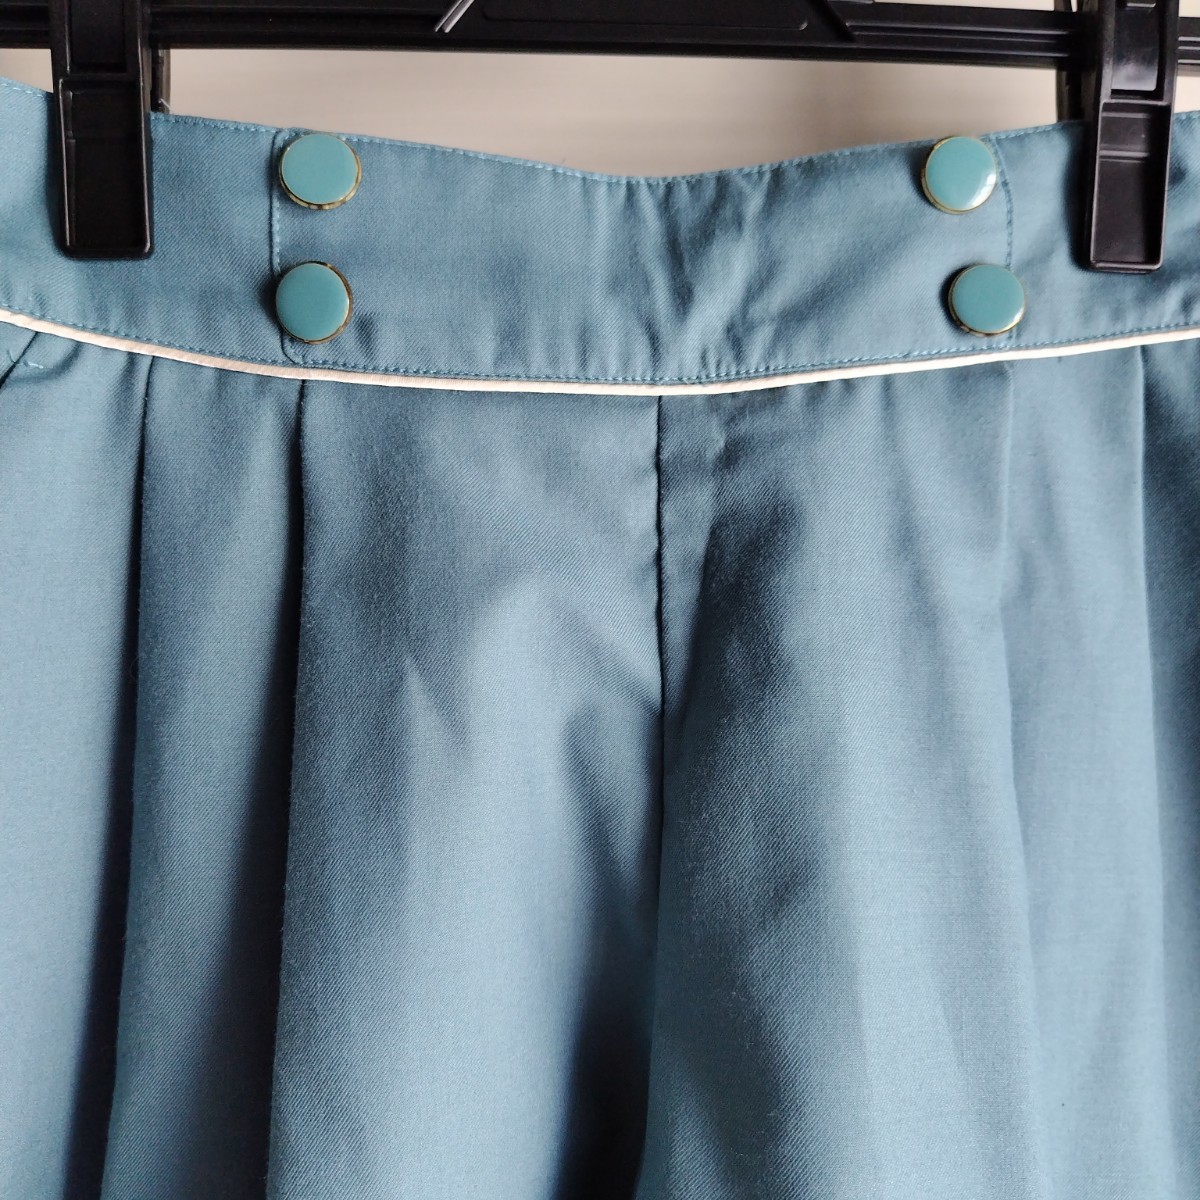  шорты половина Clan KLEIN PLUS + 36 S осень брюки симпатичный дешево проверка зеленый ito gold зажим ryus комплект осень 